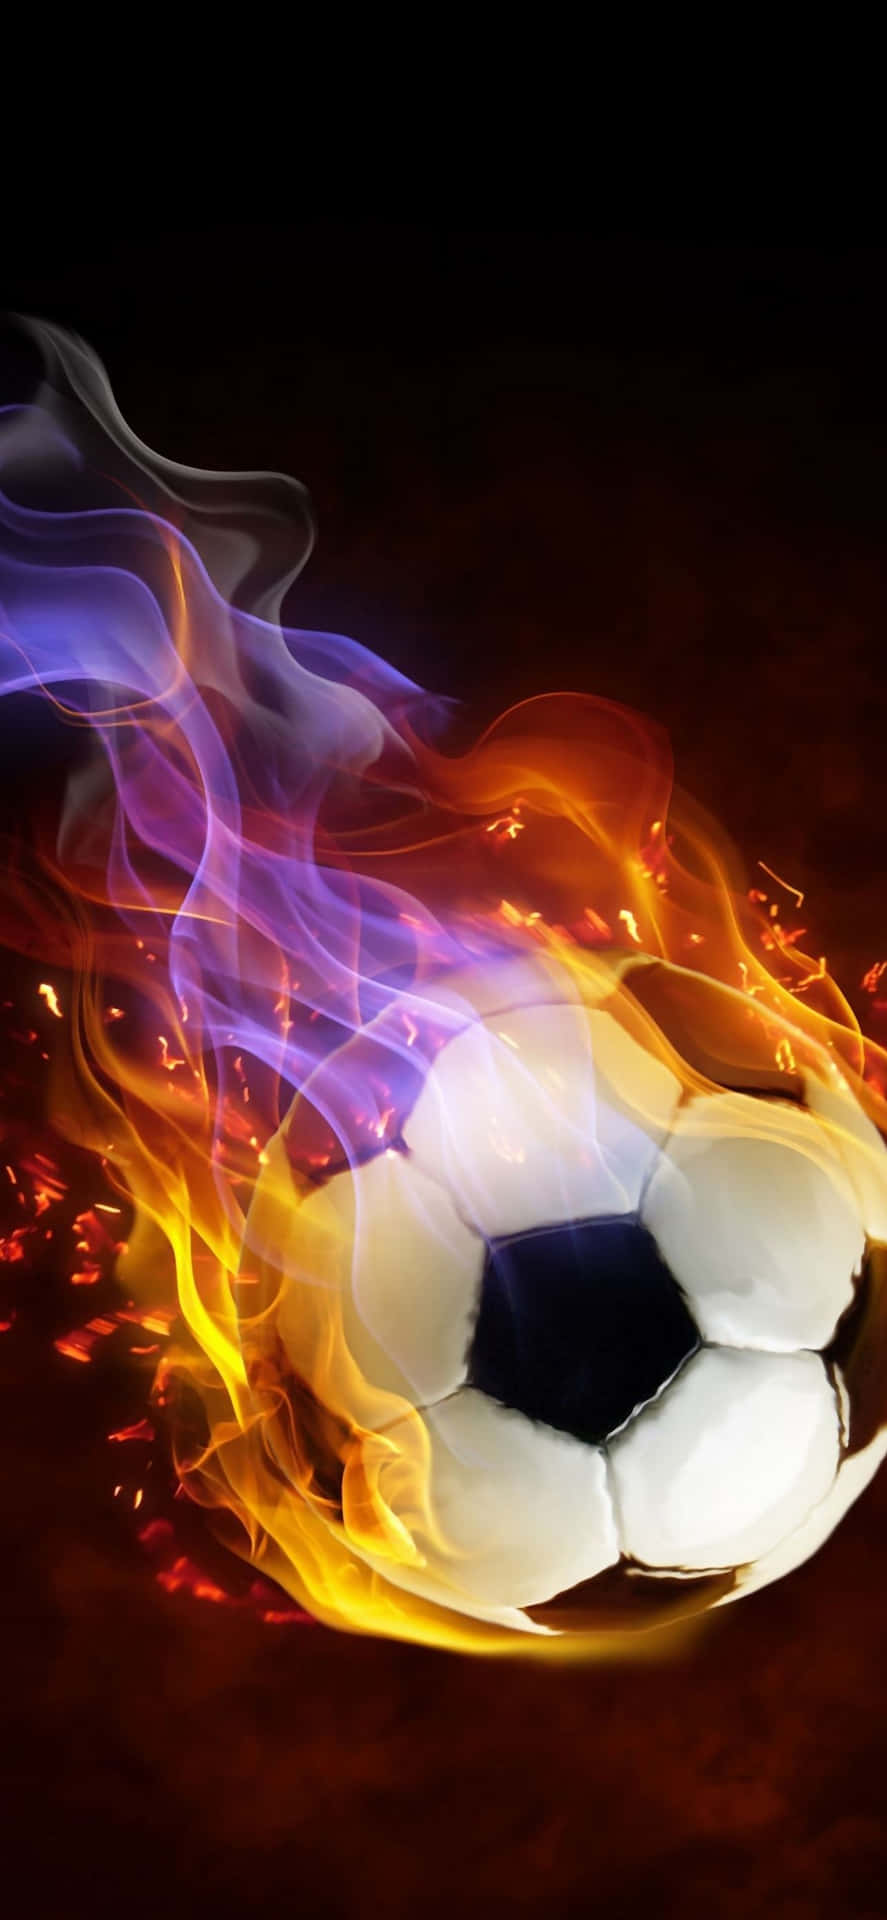 Soccer Ball Background Purple Orange Flames